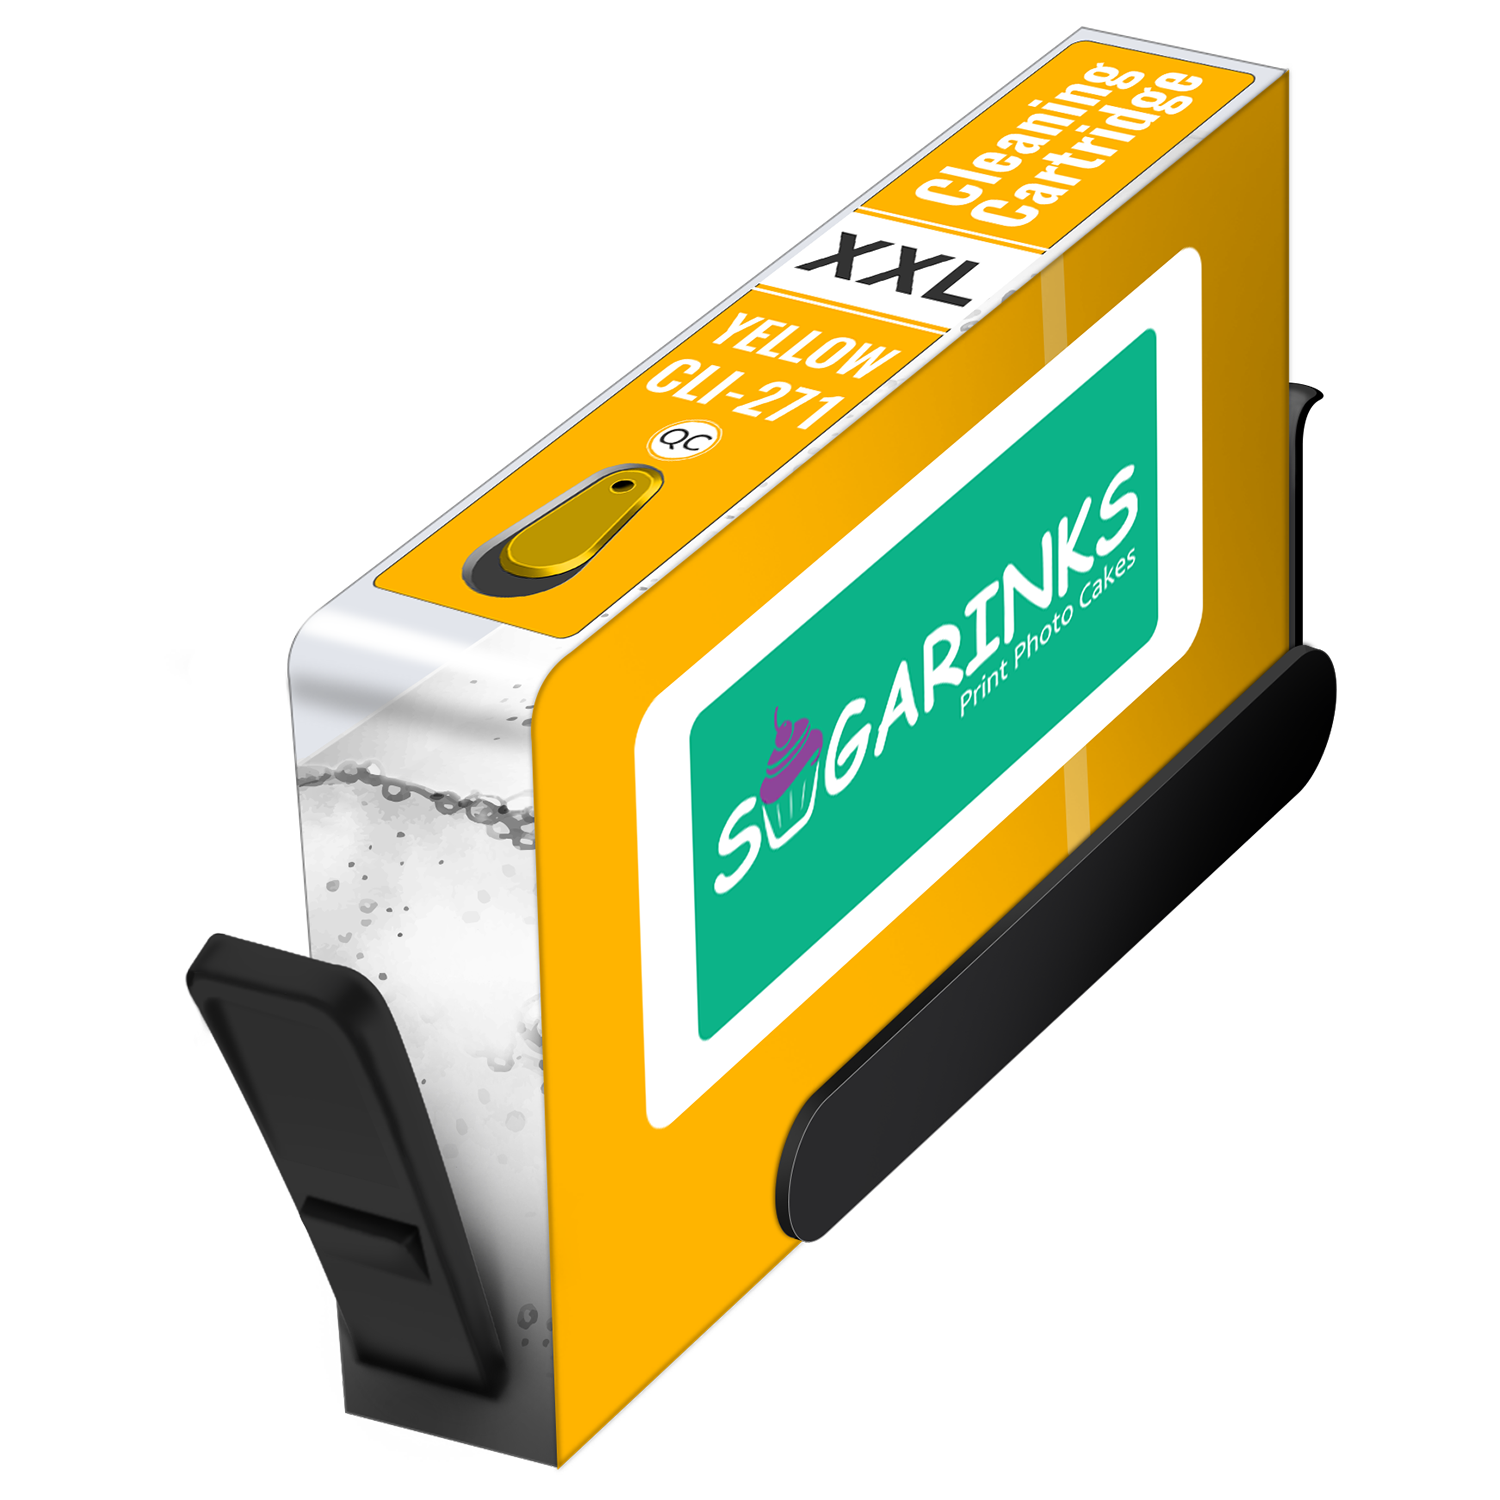 Sugarinks Edible Cleaning Cartridge CLI-271XL for Canon Edible Printer – Yellow